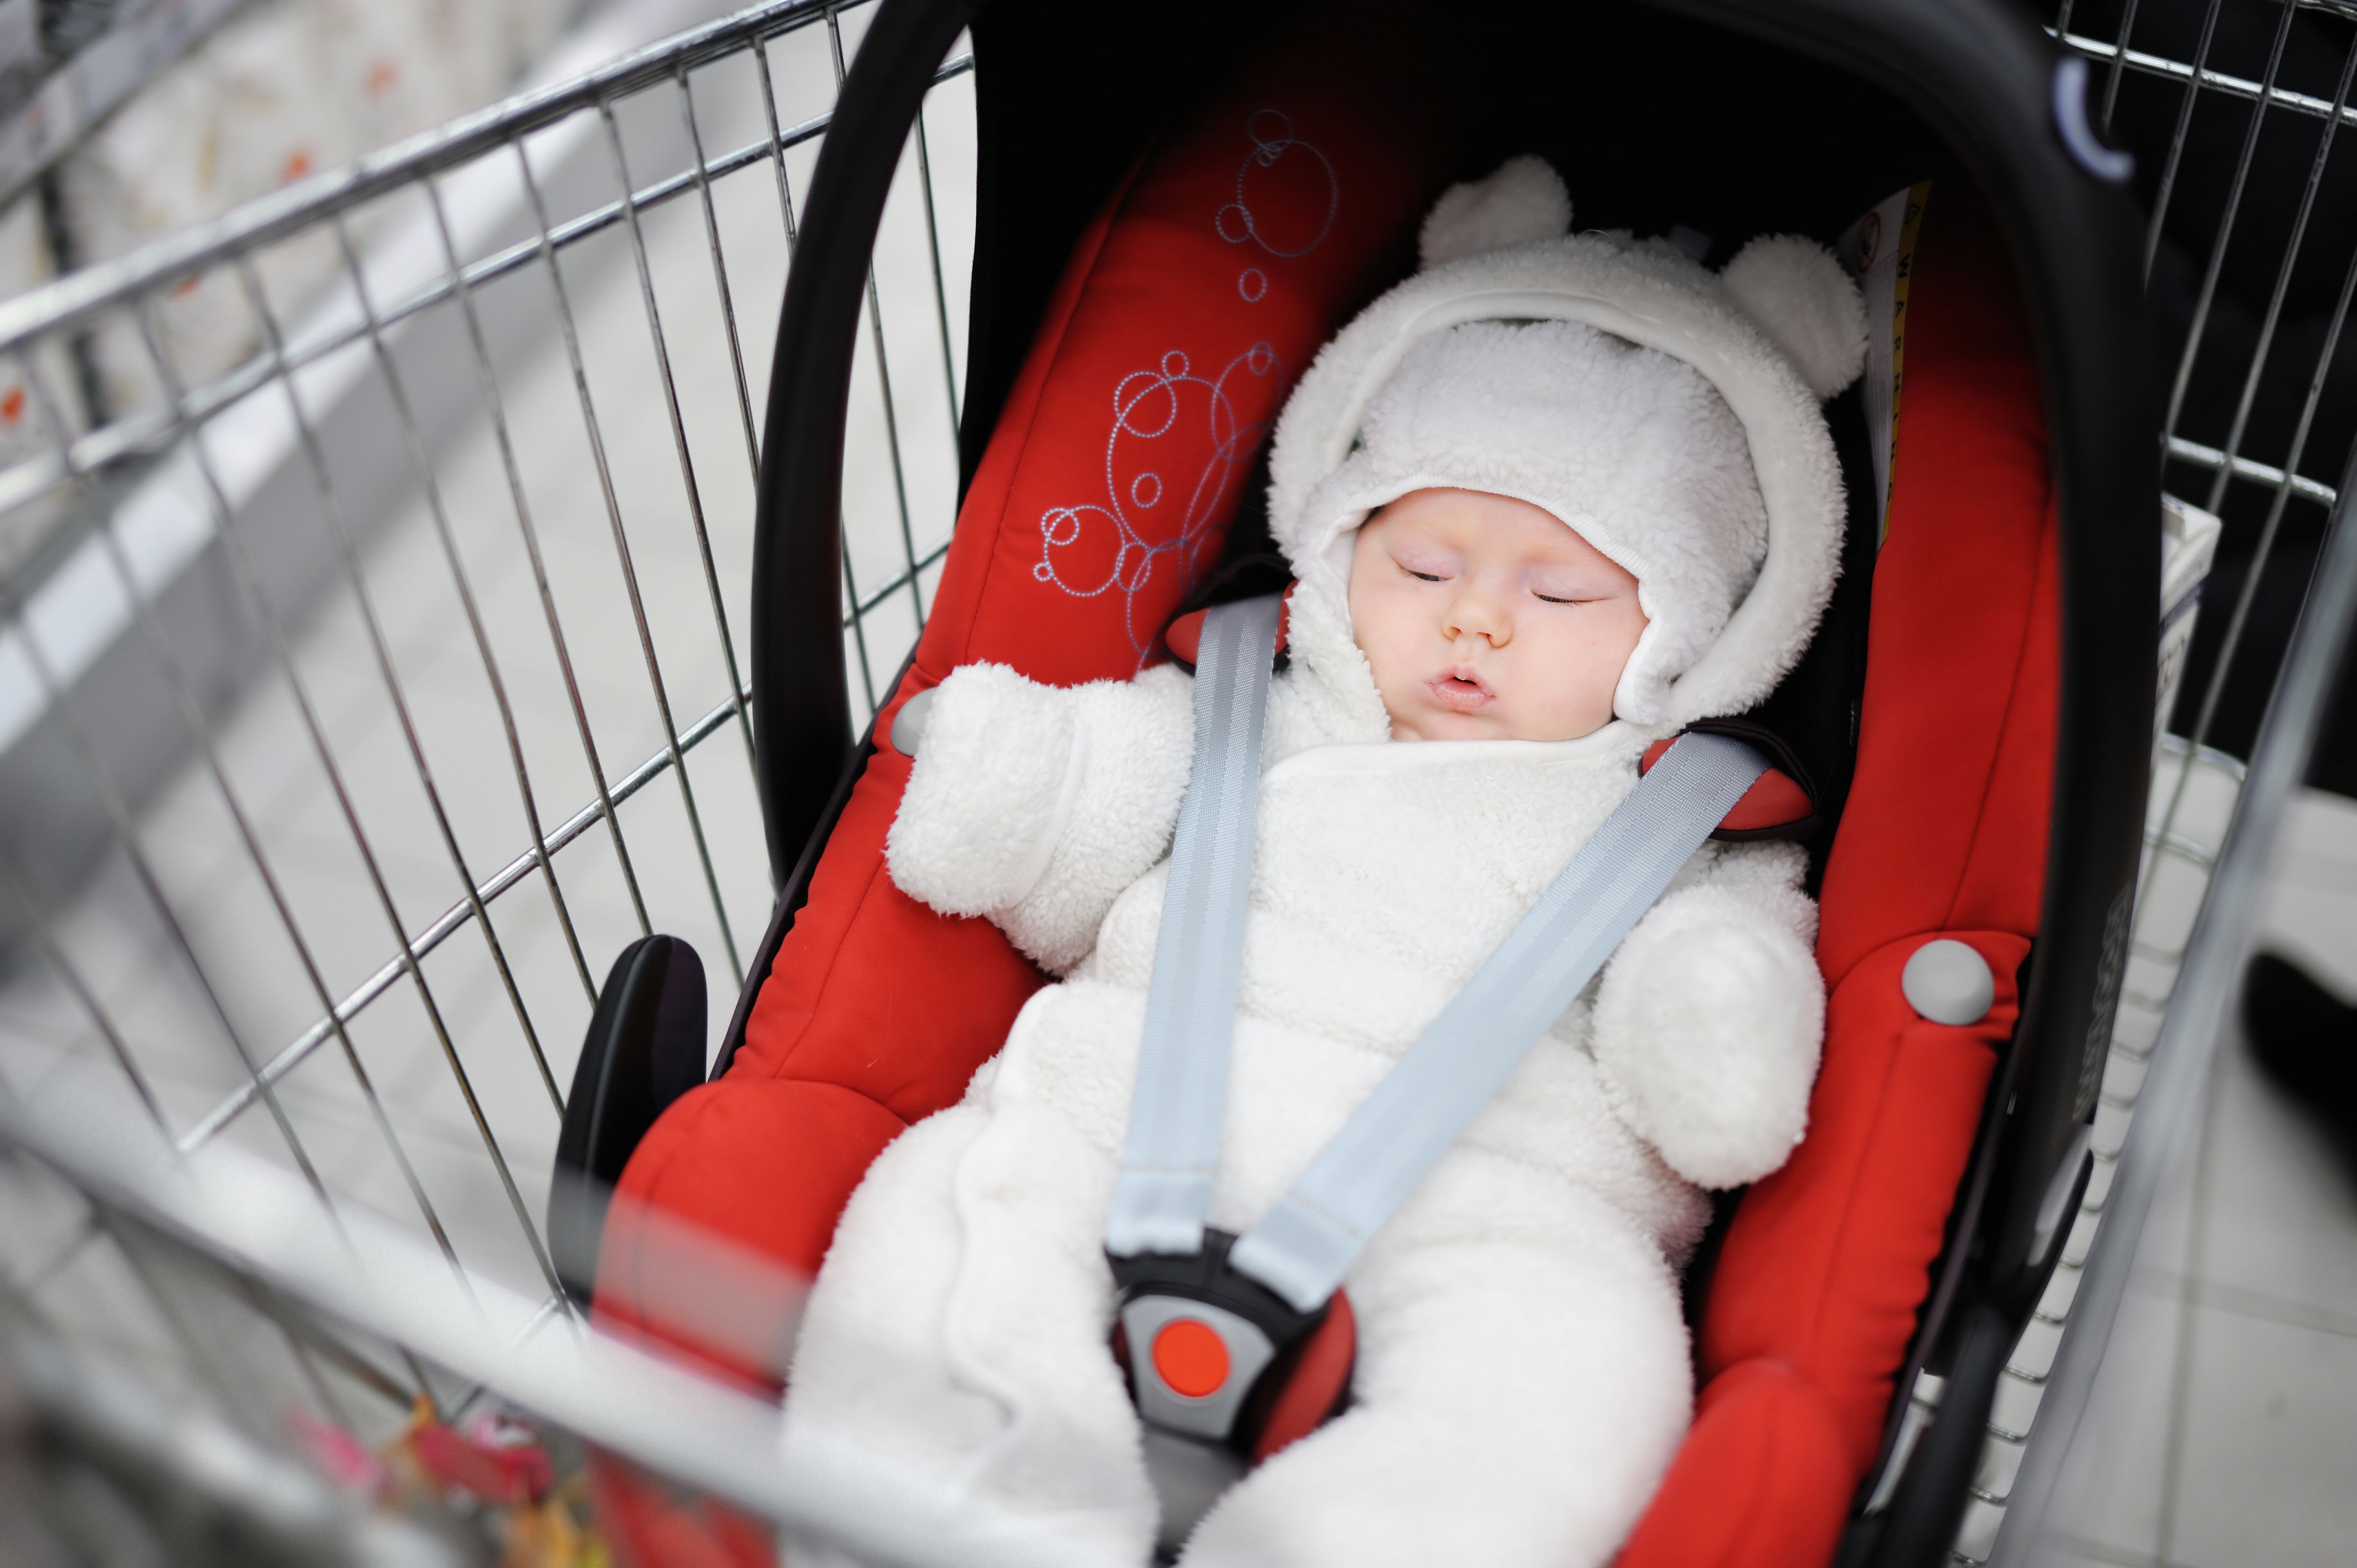 baby in car seat inside shopping cart